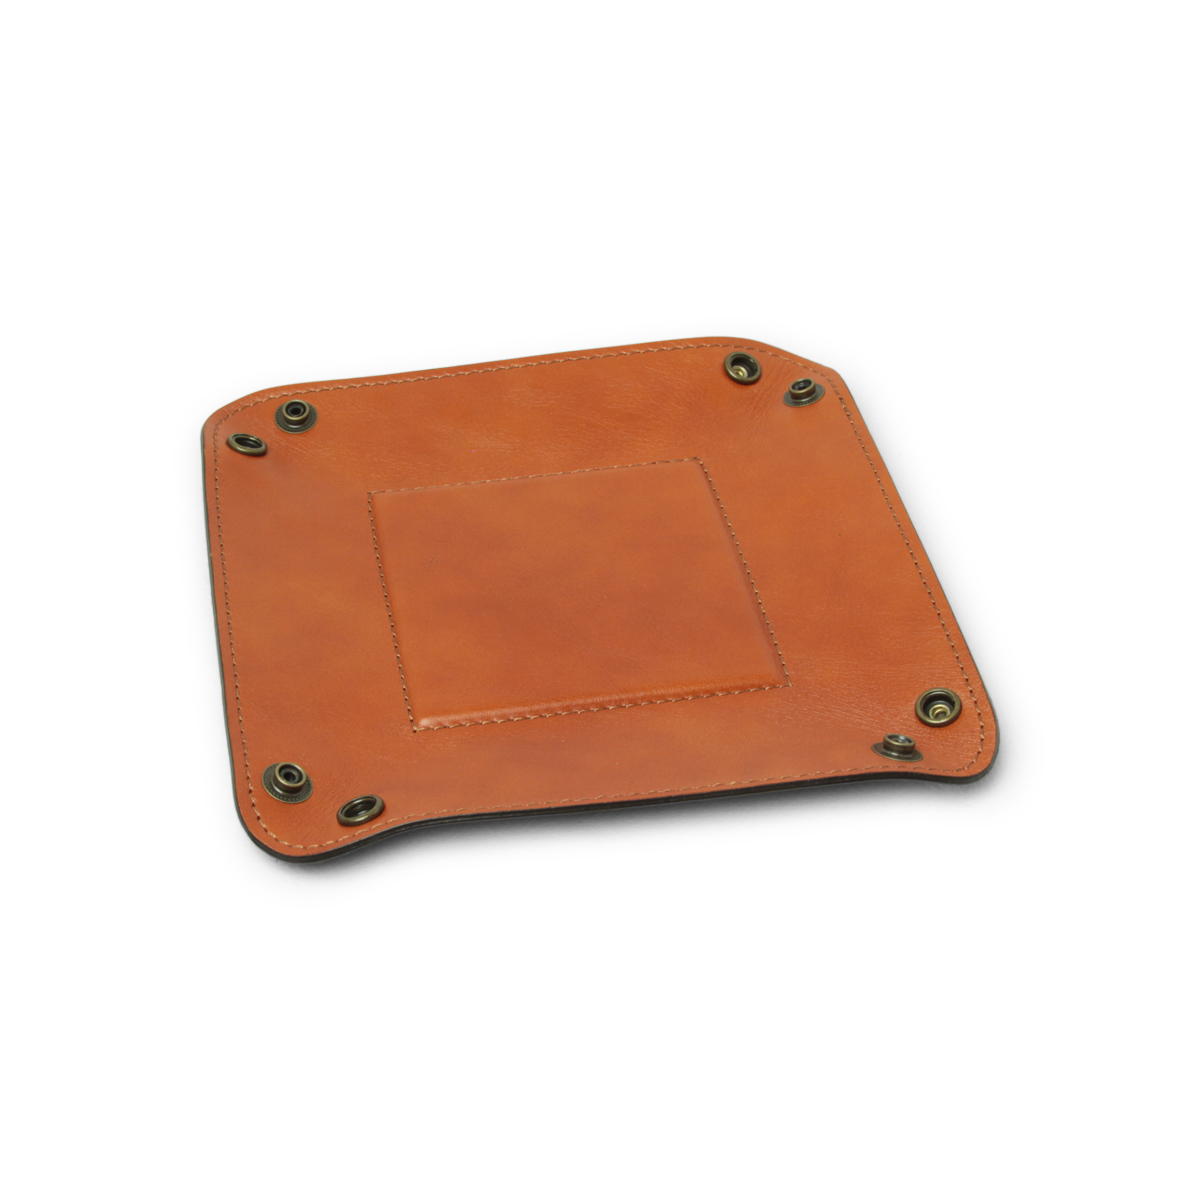 Leather valet tray - orange|755589CT|Old Angler Firenze